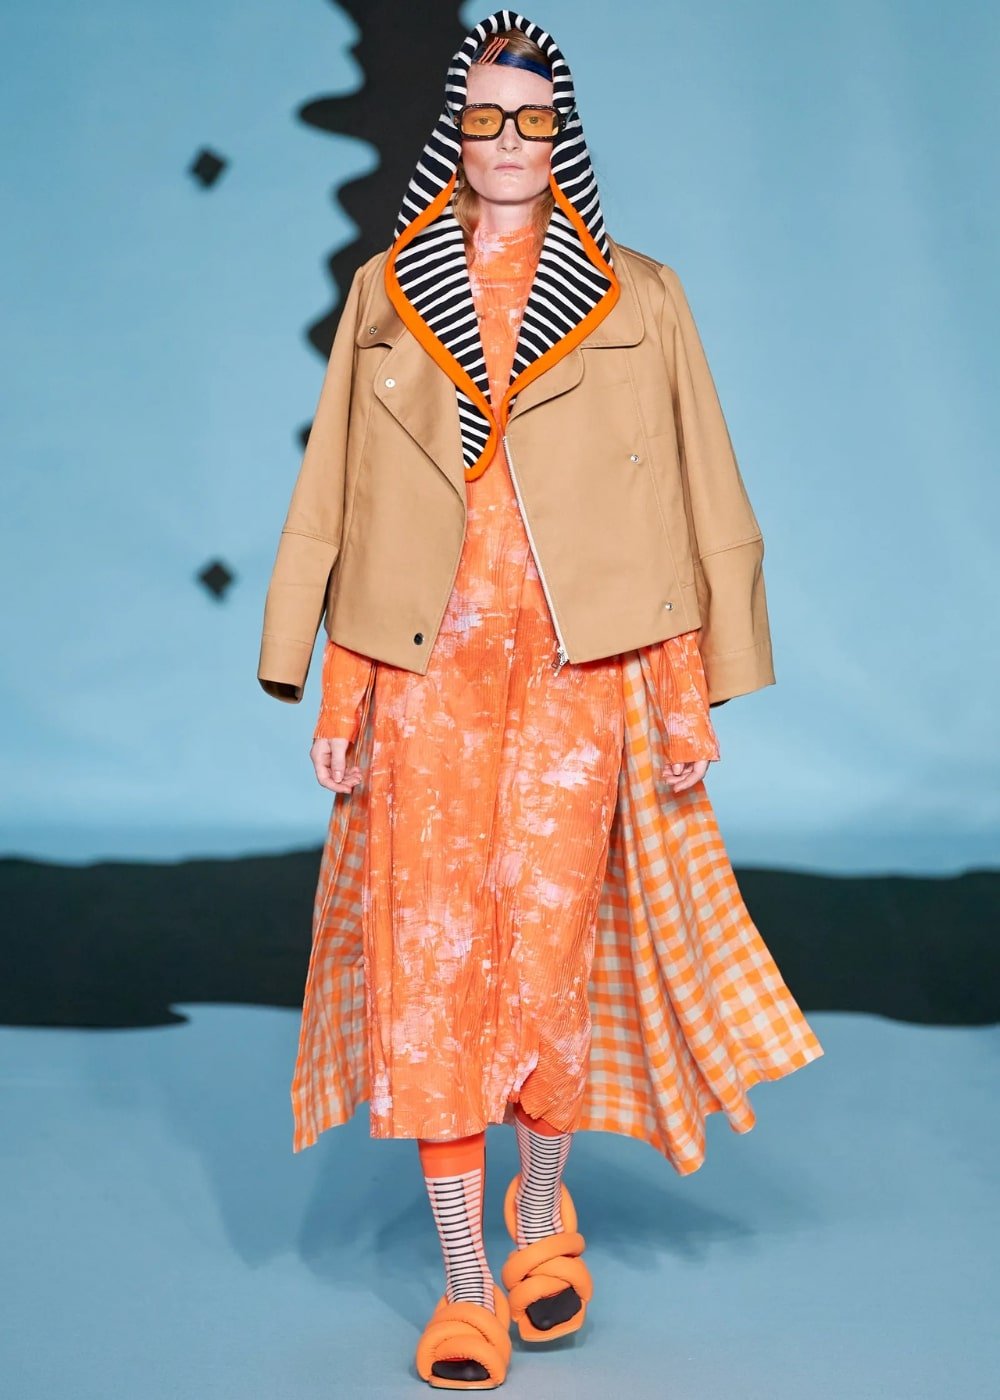 Henrik Vibskov - vestido estampado laranja, com casaco bege e óculos de lentes coloridas - semana de moda de Copenhagen - Primavera - modelo andando pela passarela - https://stealthelook.com.br